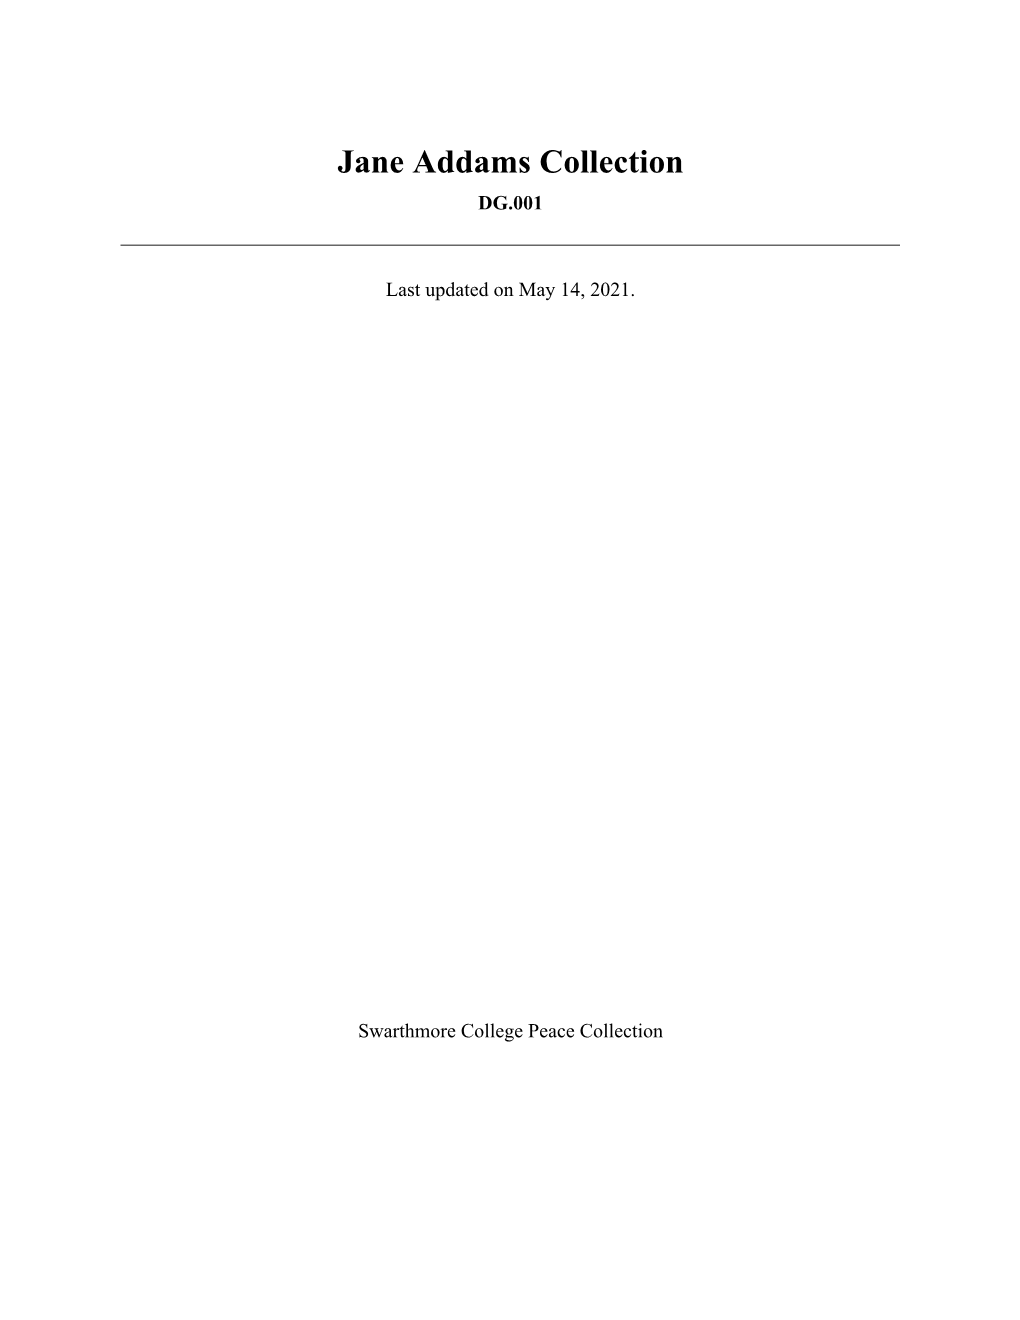 Jane Addams Collection DG.001